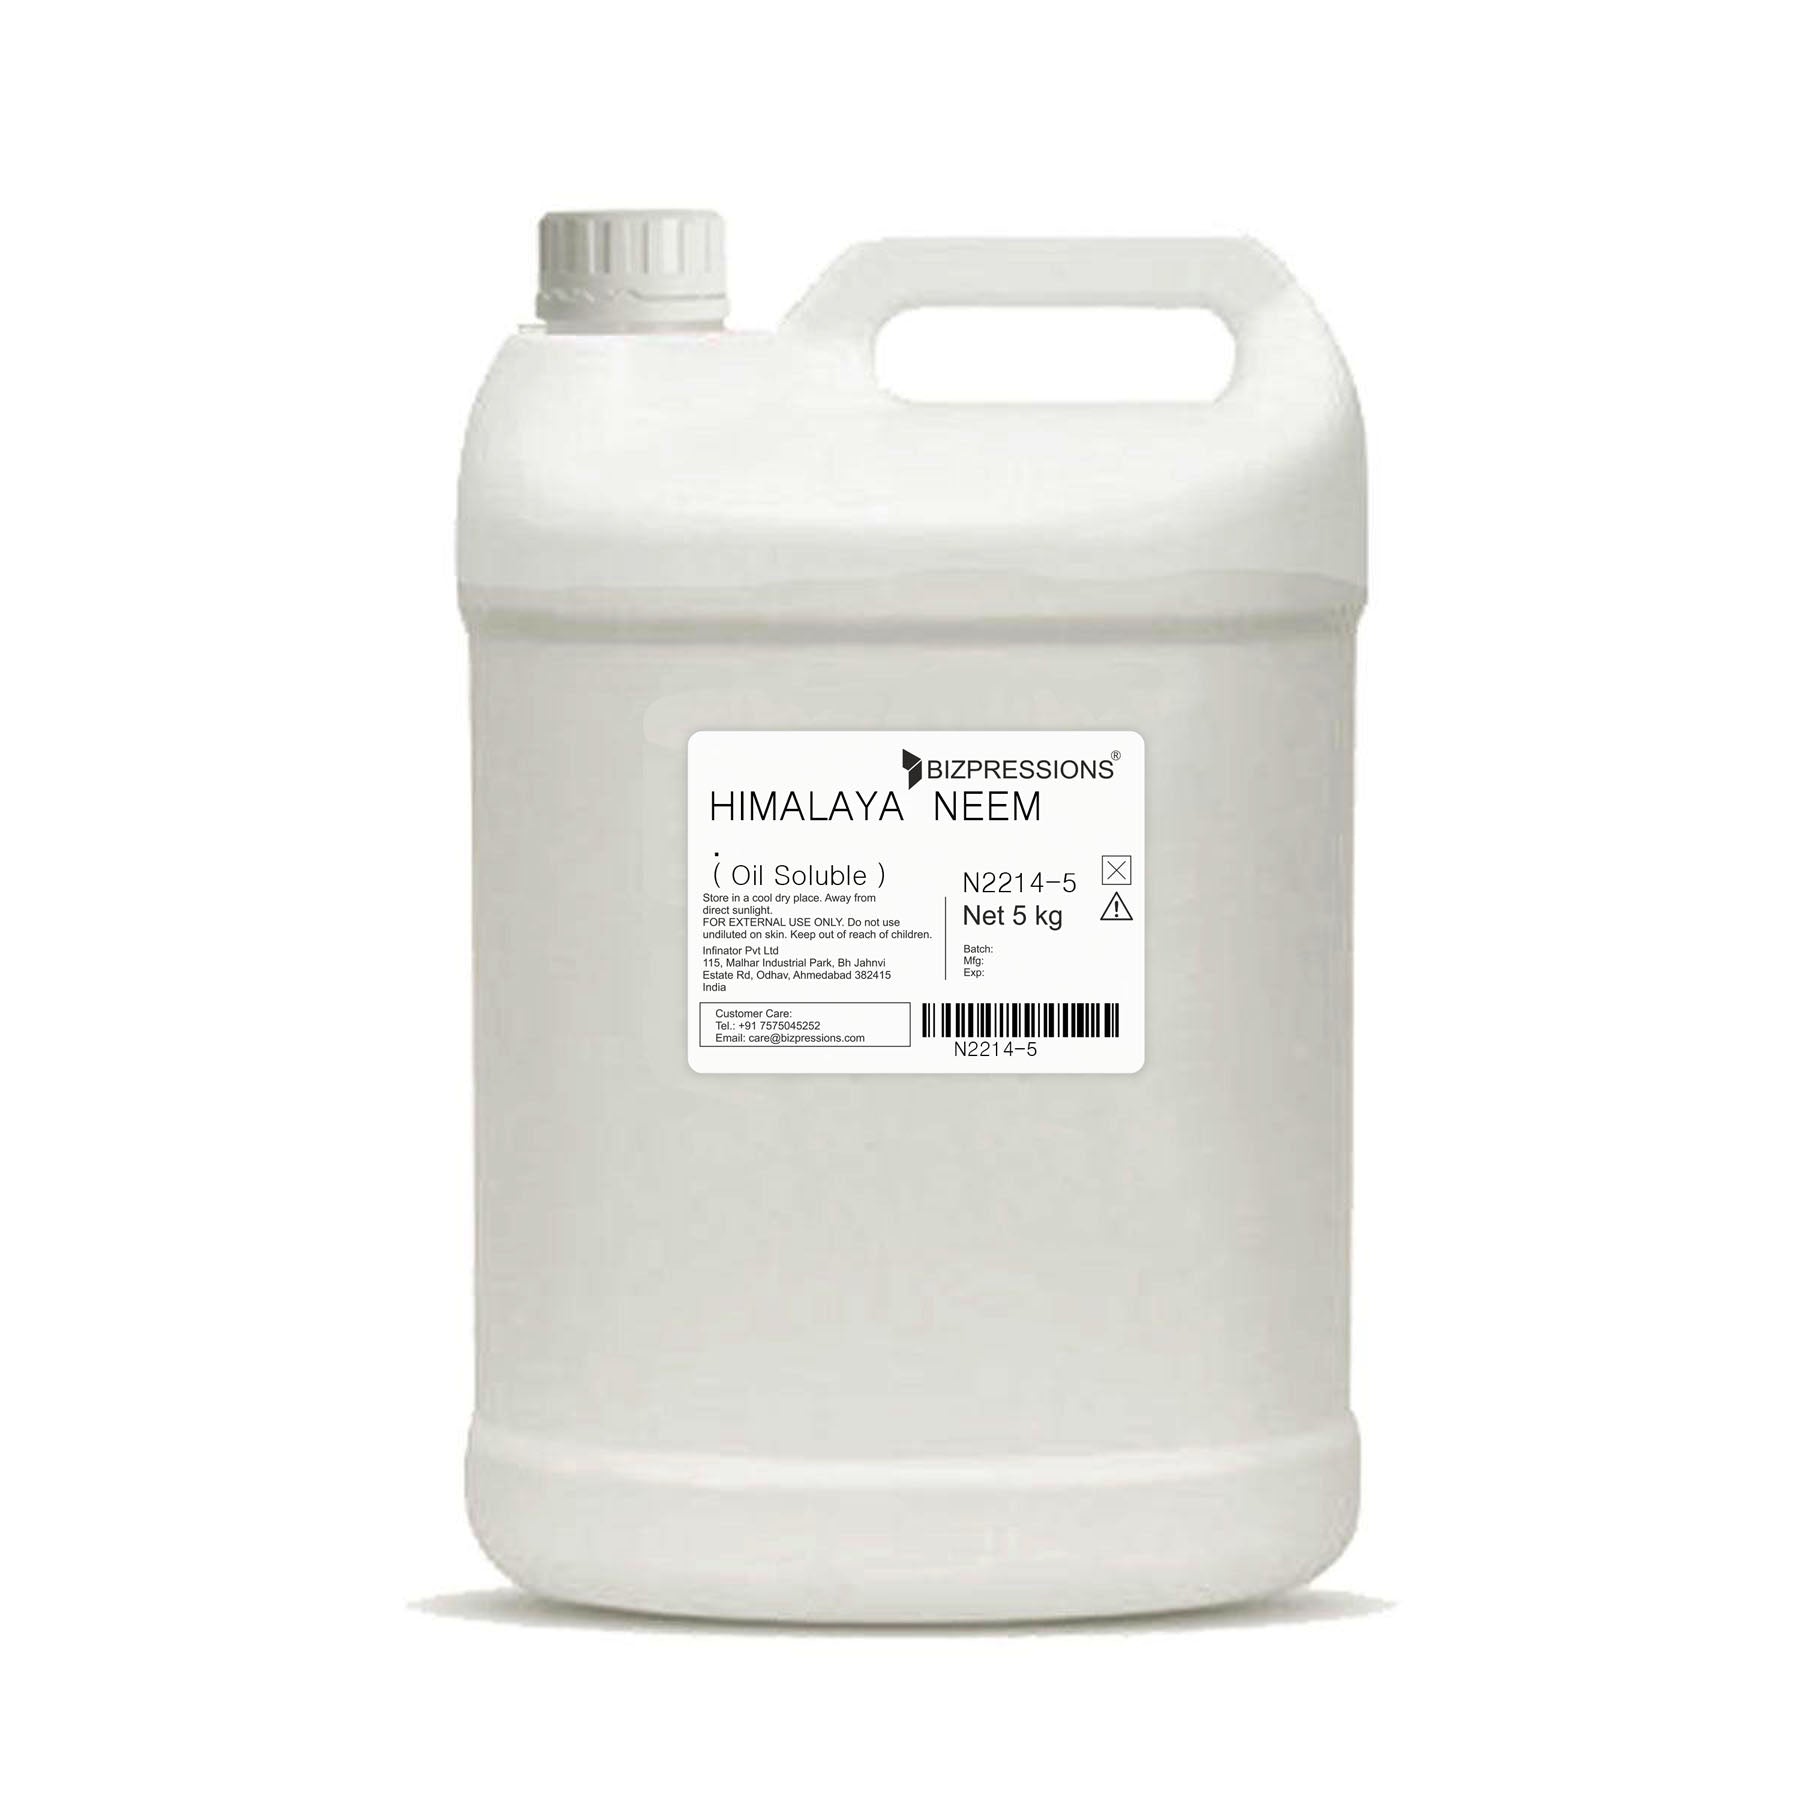 HIMALAYA NEEM - Fragrance ( Oil Soluble ) - 5 kg